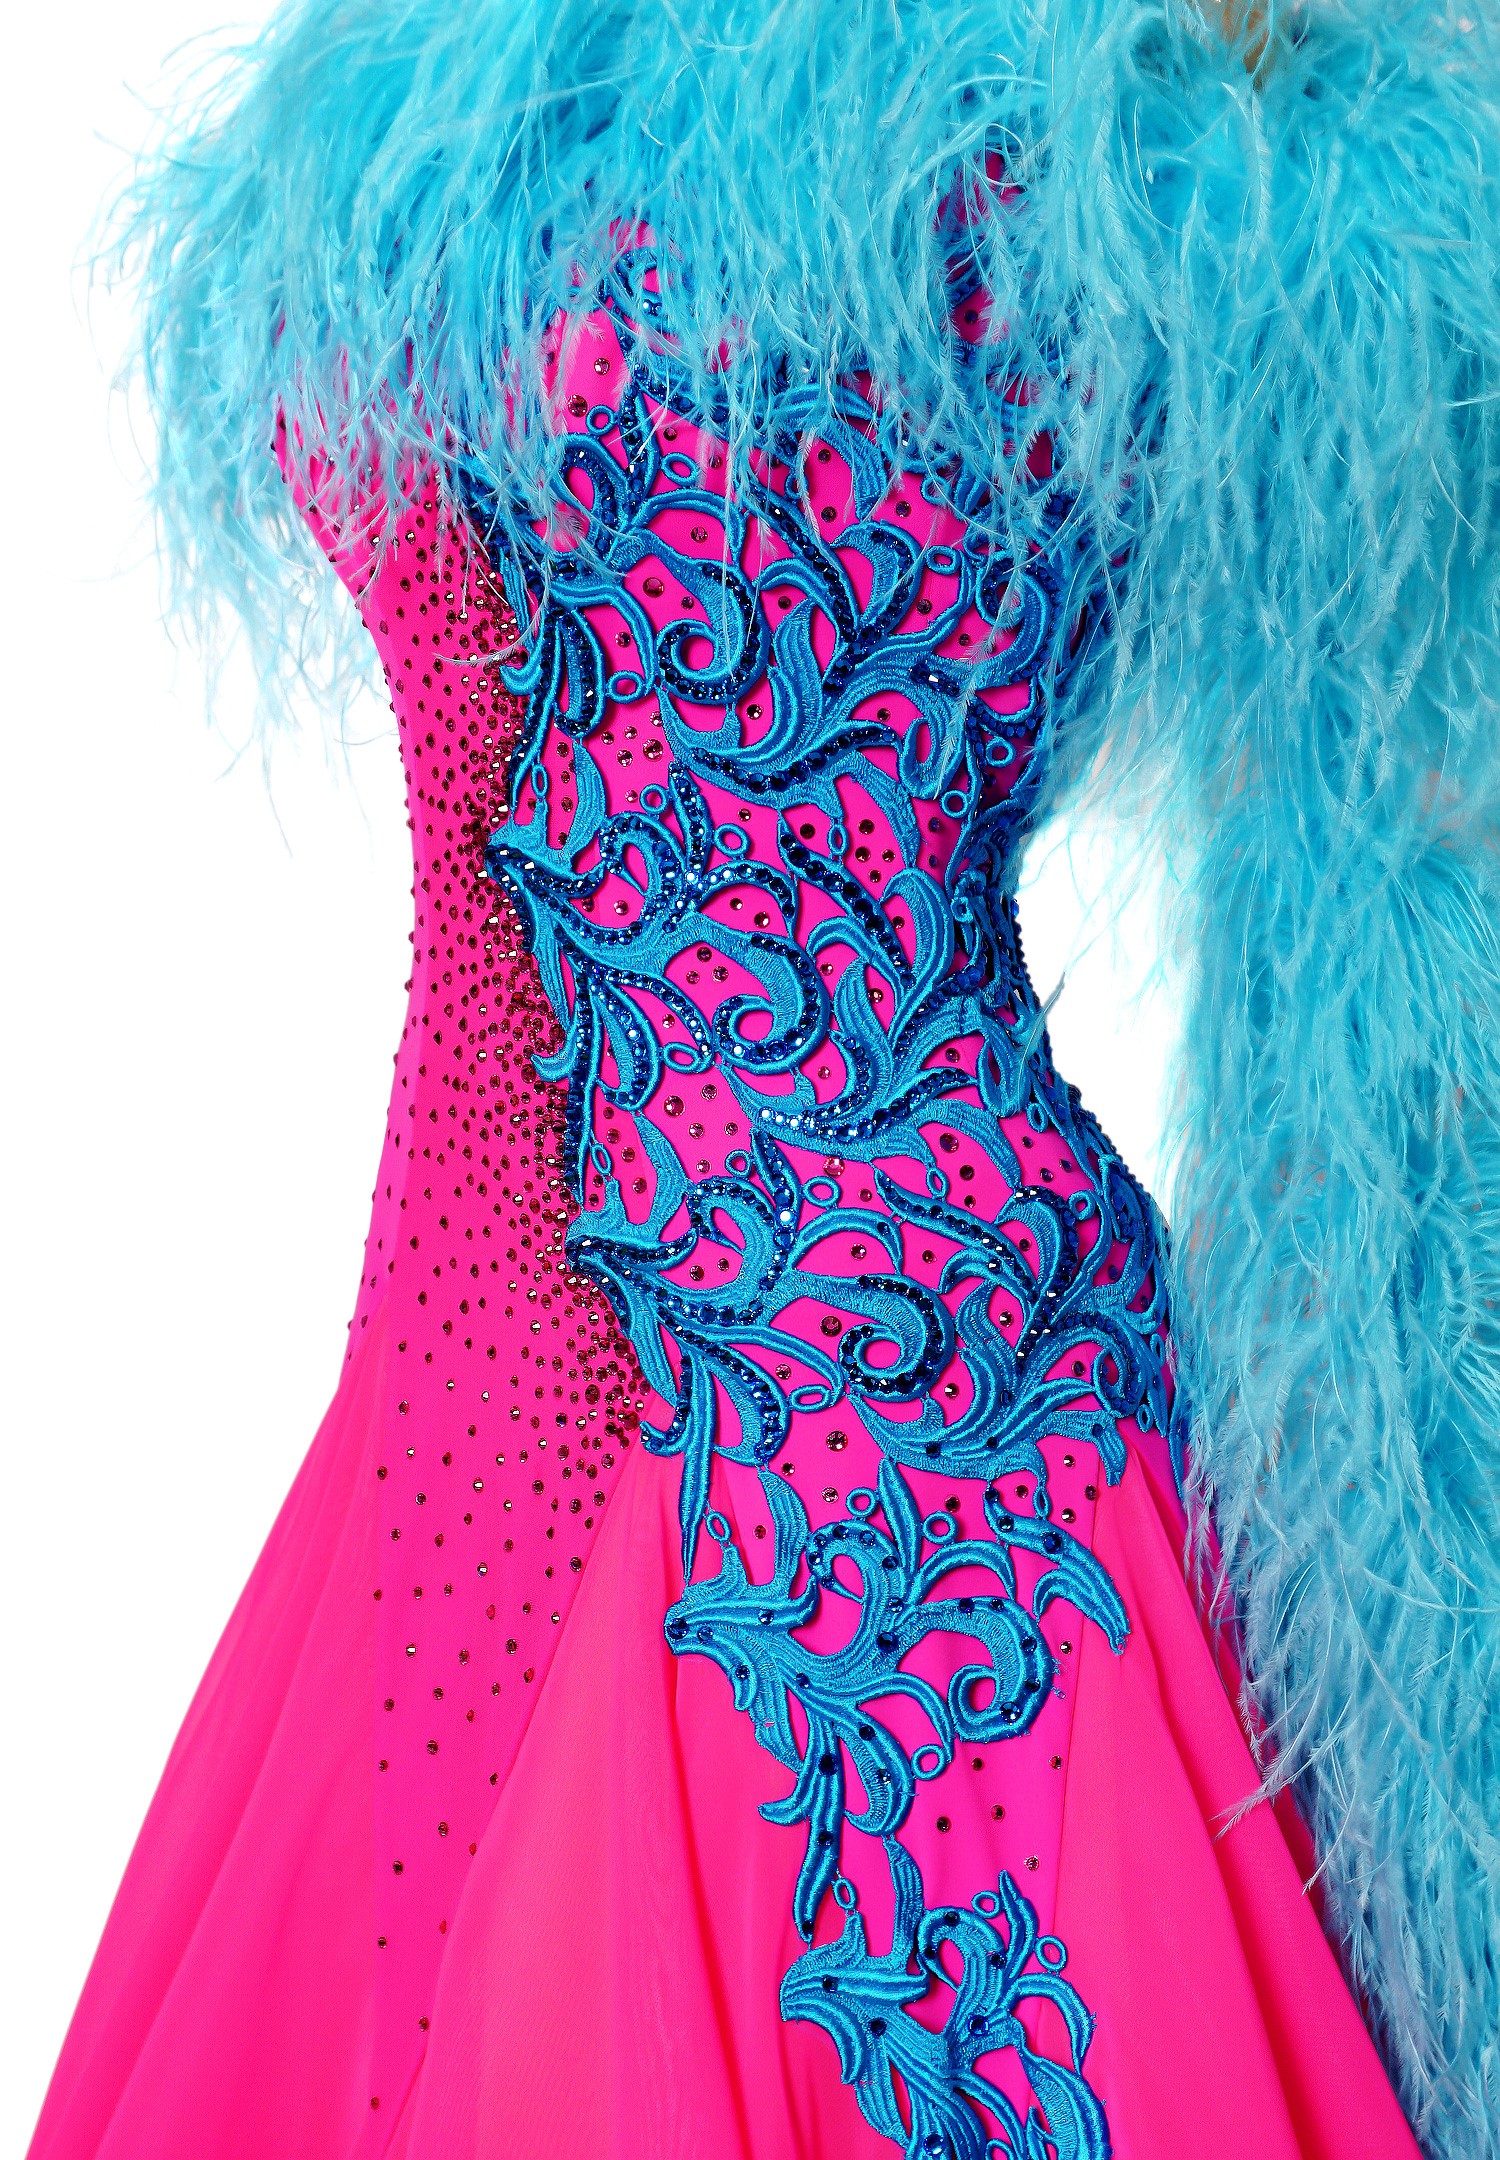 Crystal Boa Applique Ballroom Dance Gown PCWB19002